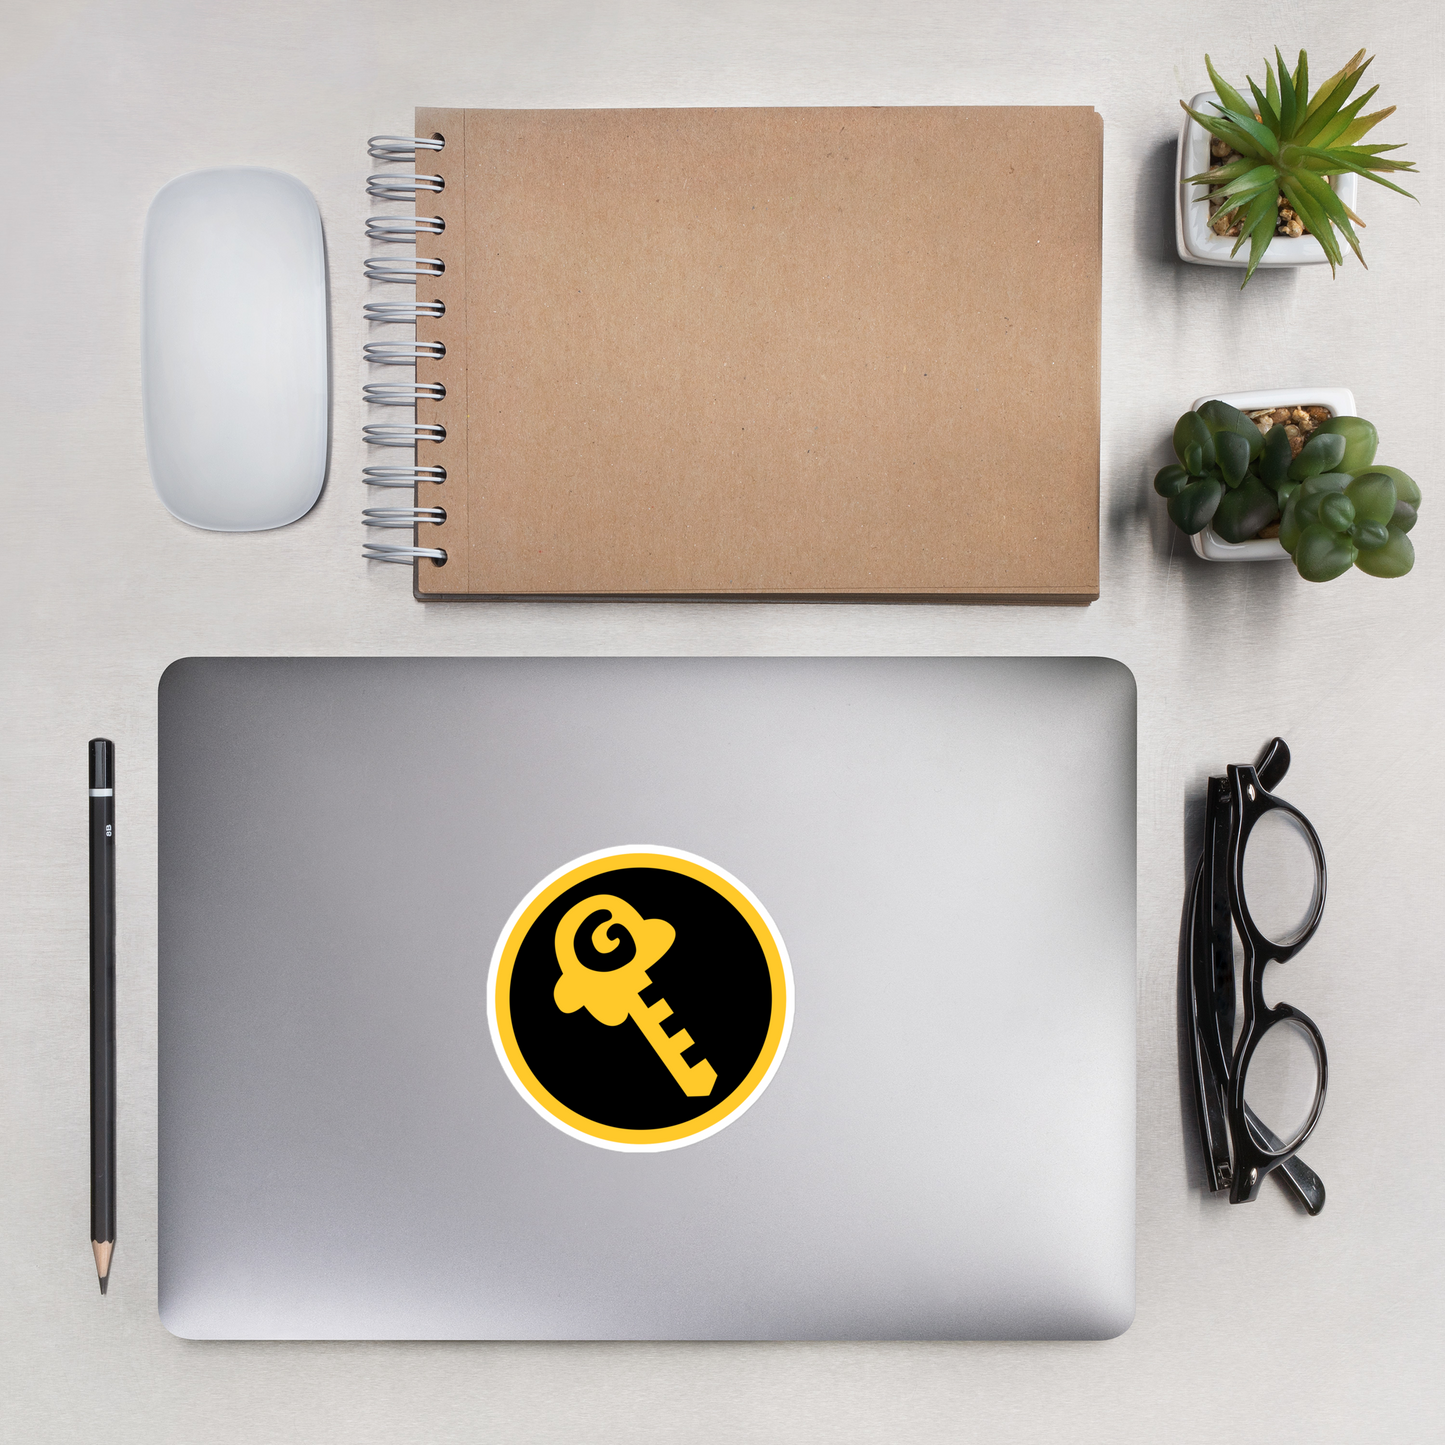 Gkey logo bubble-free stickers (yellow and black logo)